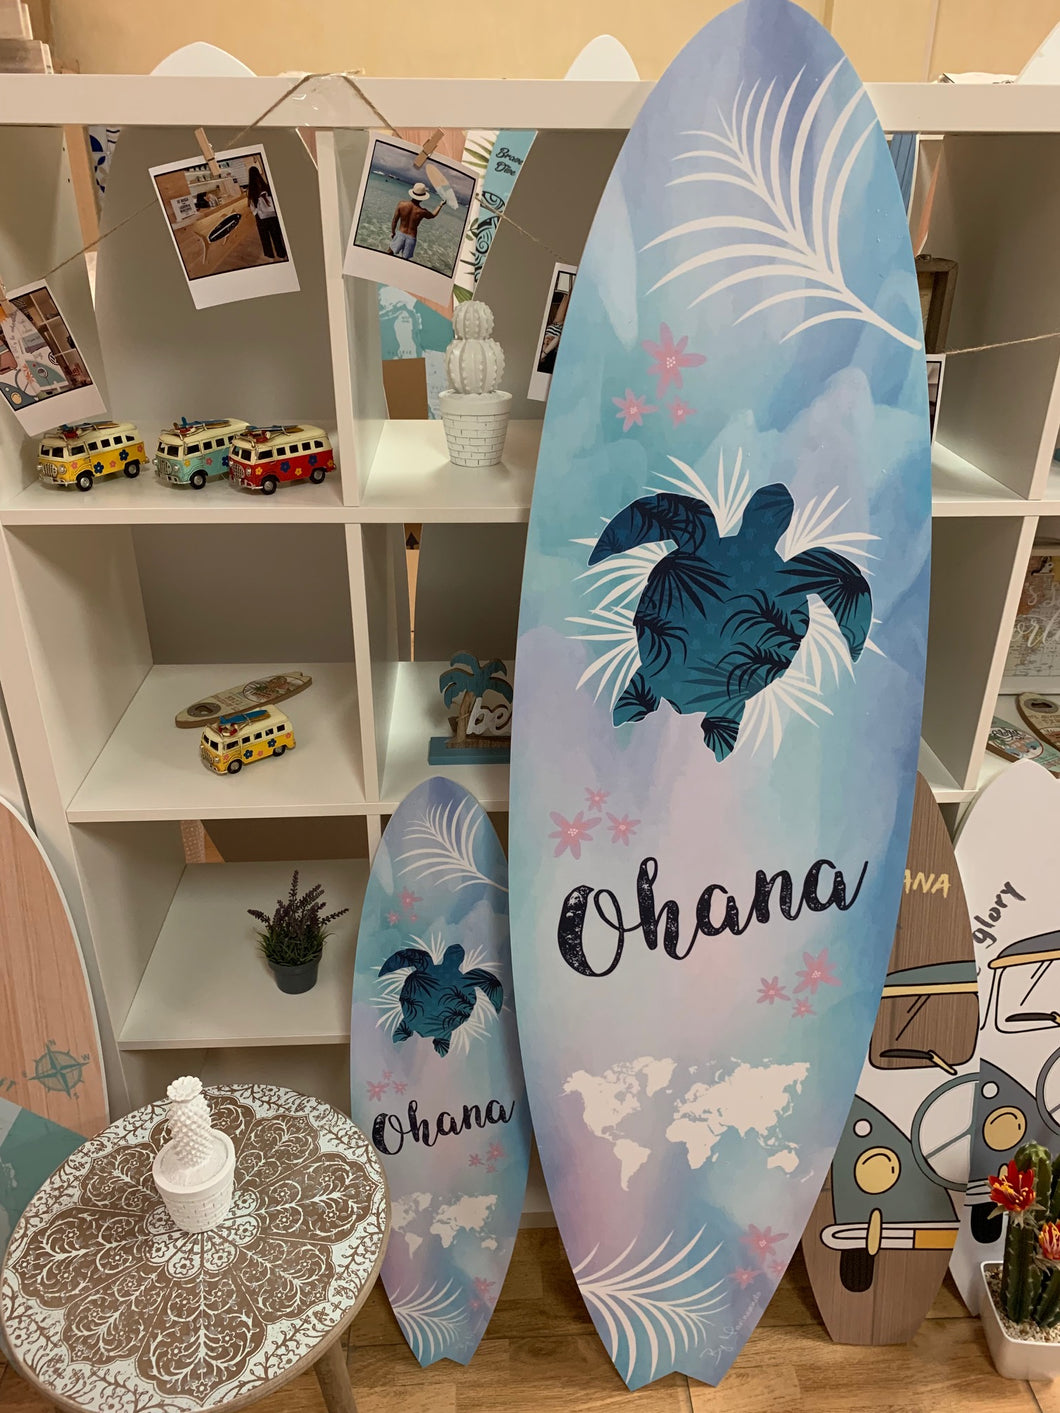 Tabla de surf decorativas